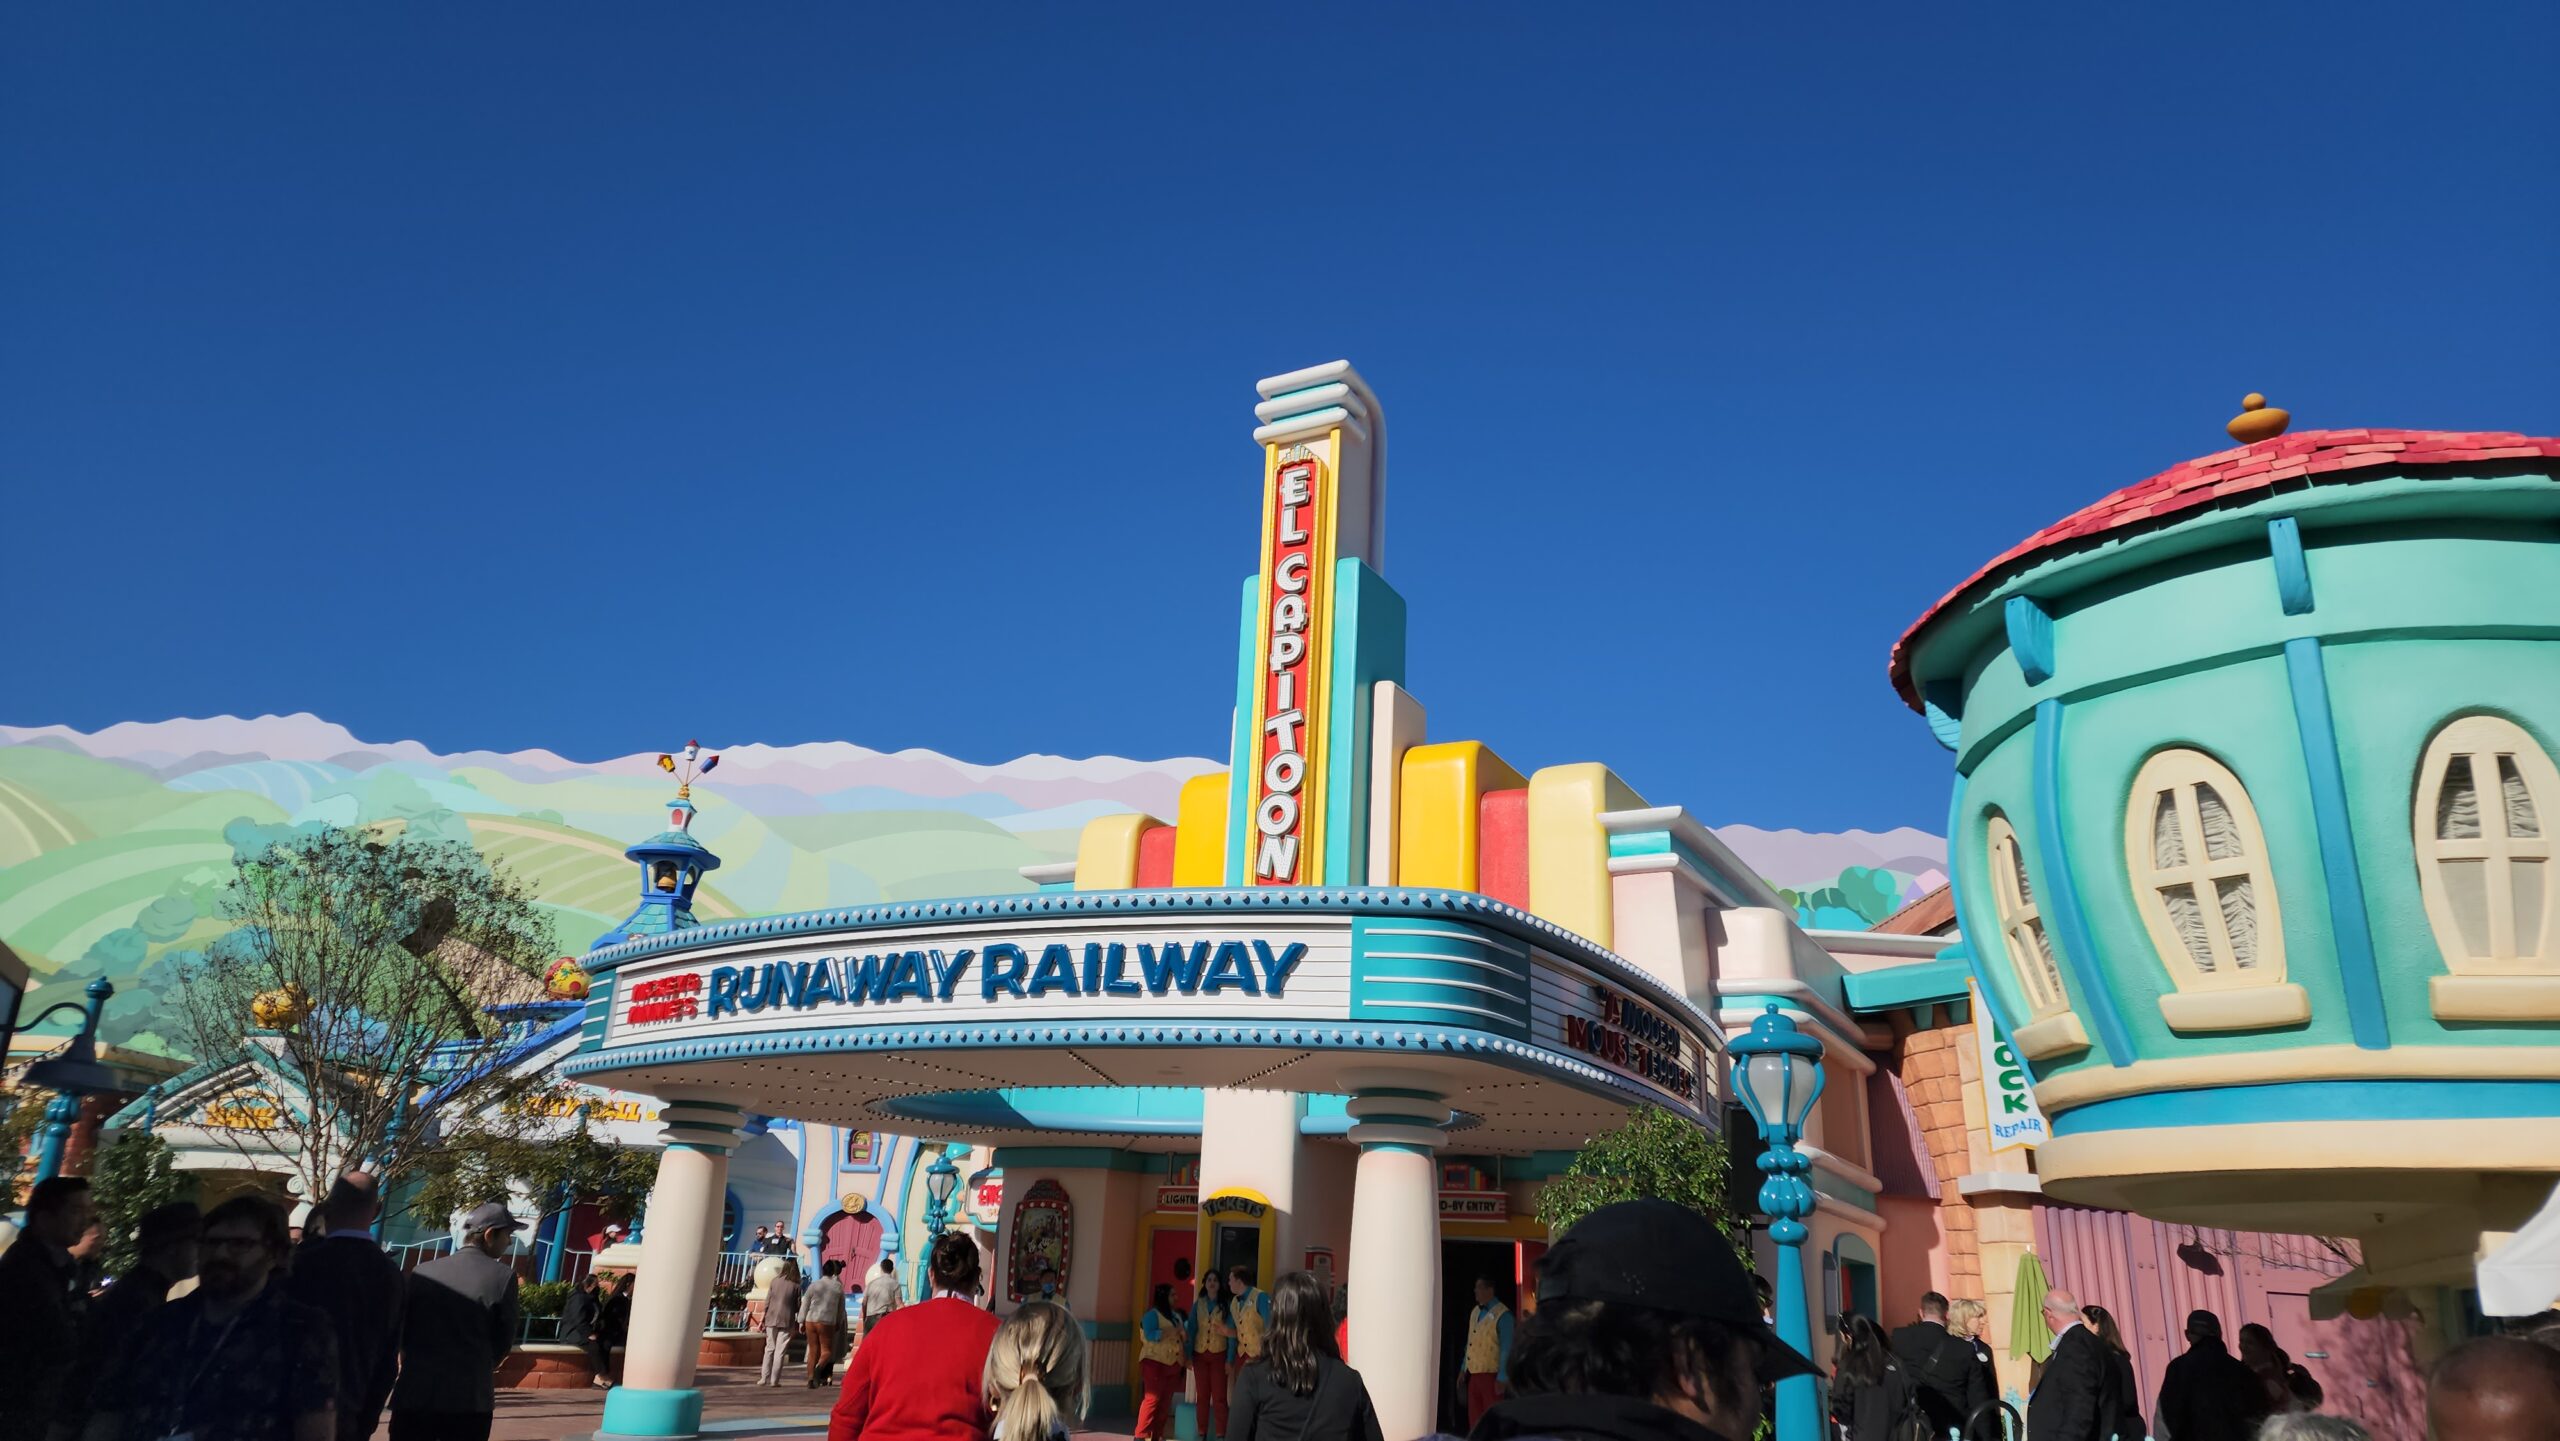 Mickey & Minnie's Runaway Railway: Disneyland vs. Walt Disney World